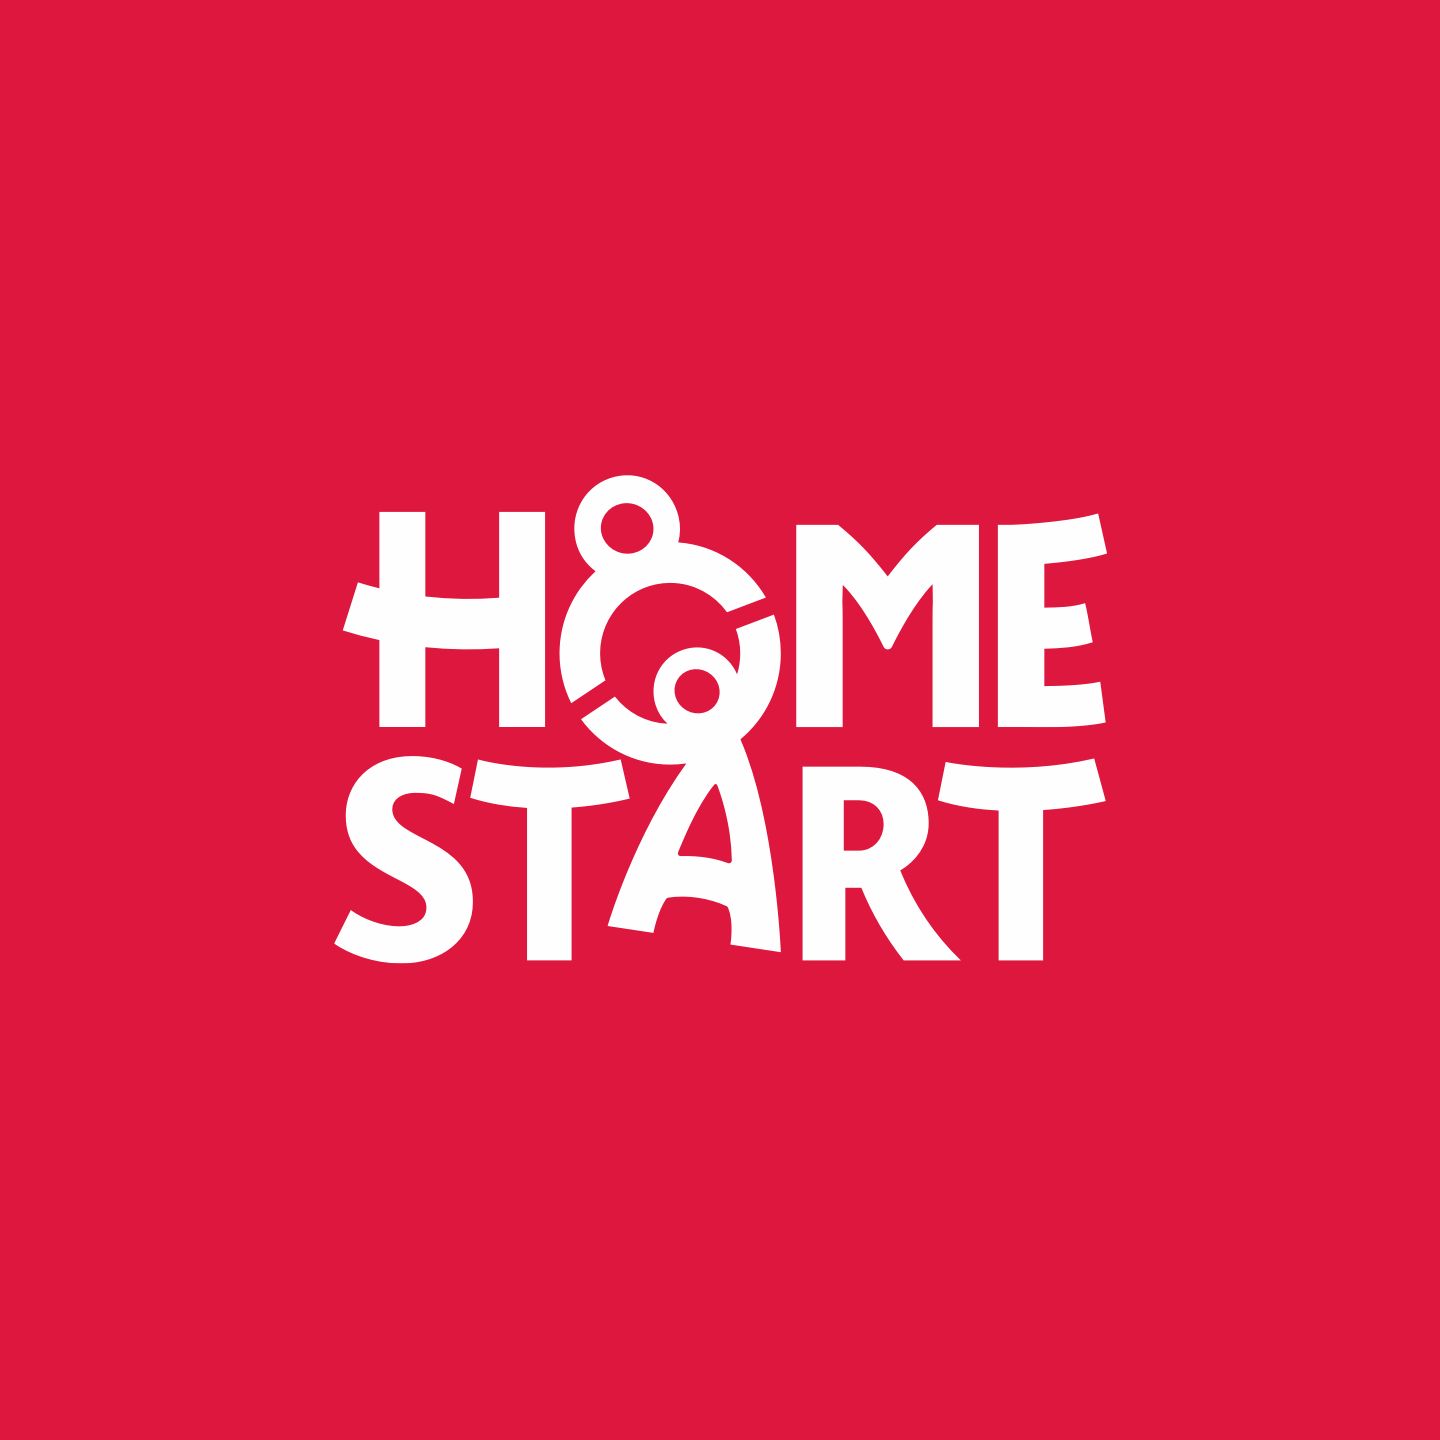  Home-Start Logo on red background